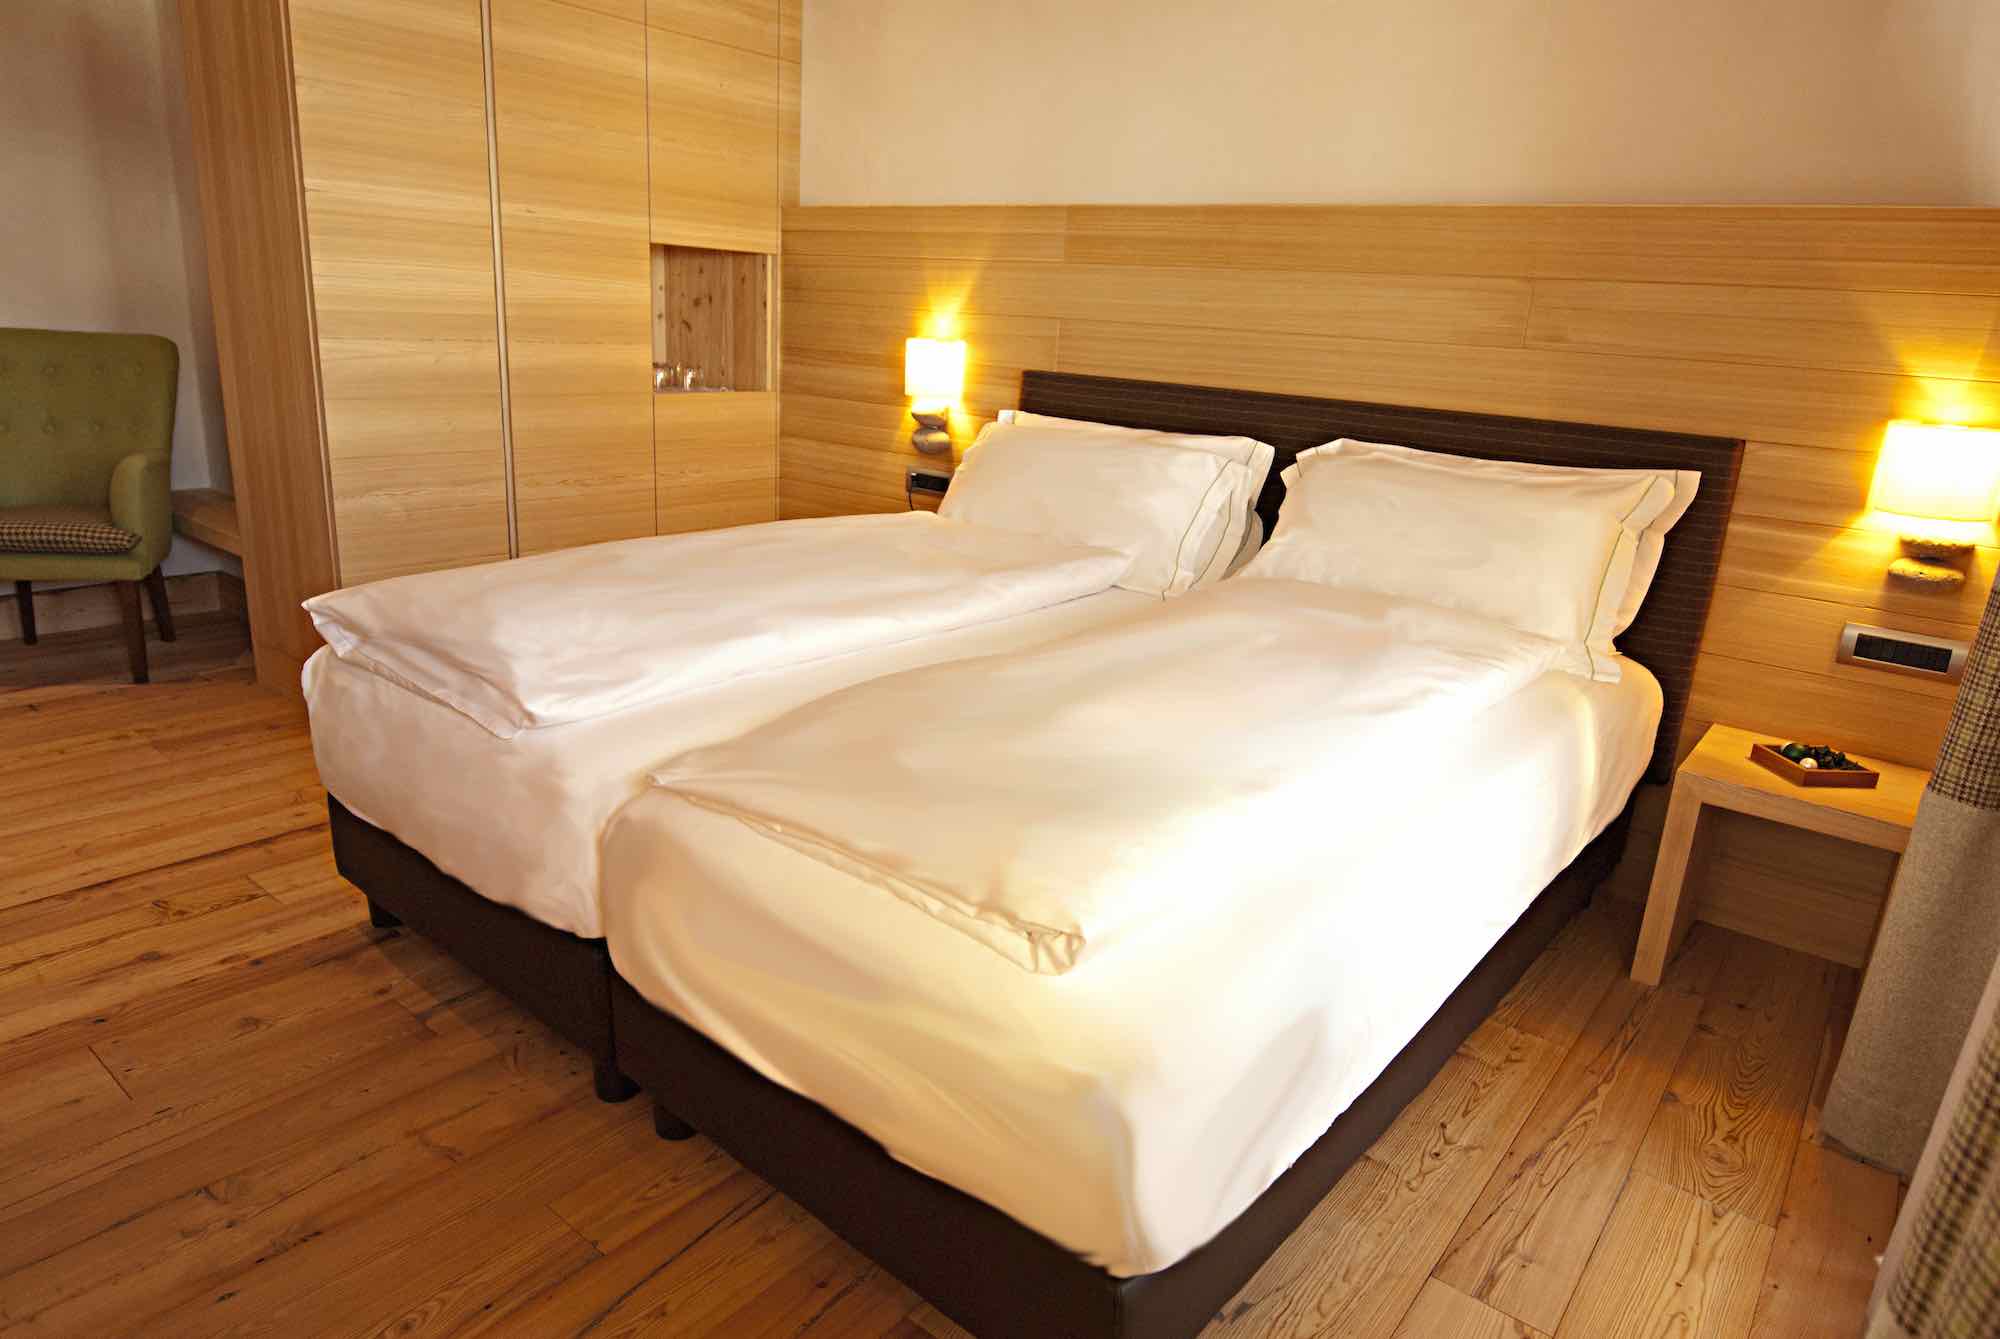 Hotel Larice - Via Botarel 40, Livigno 23041 - Room - Comfort 1